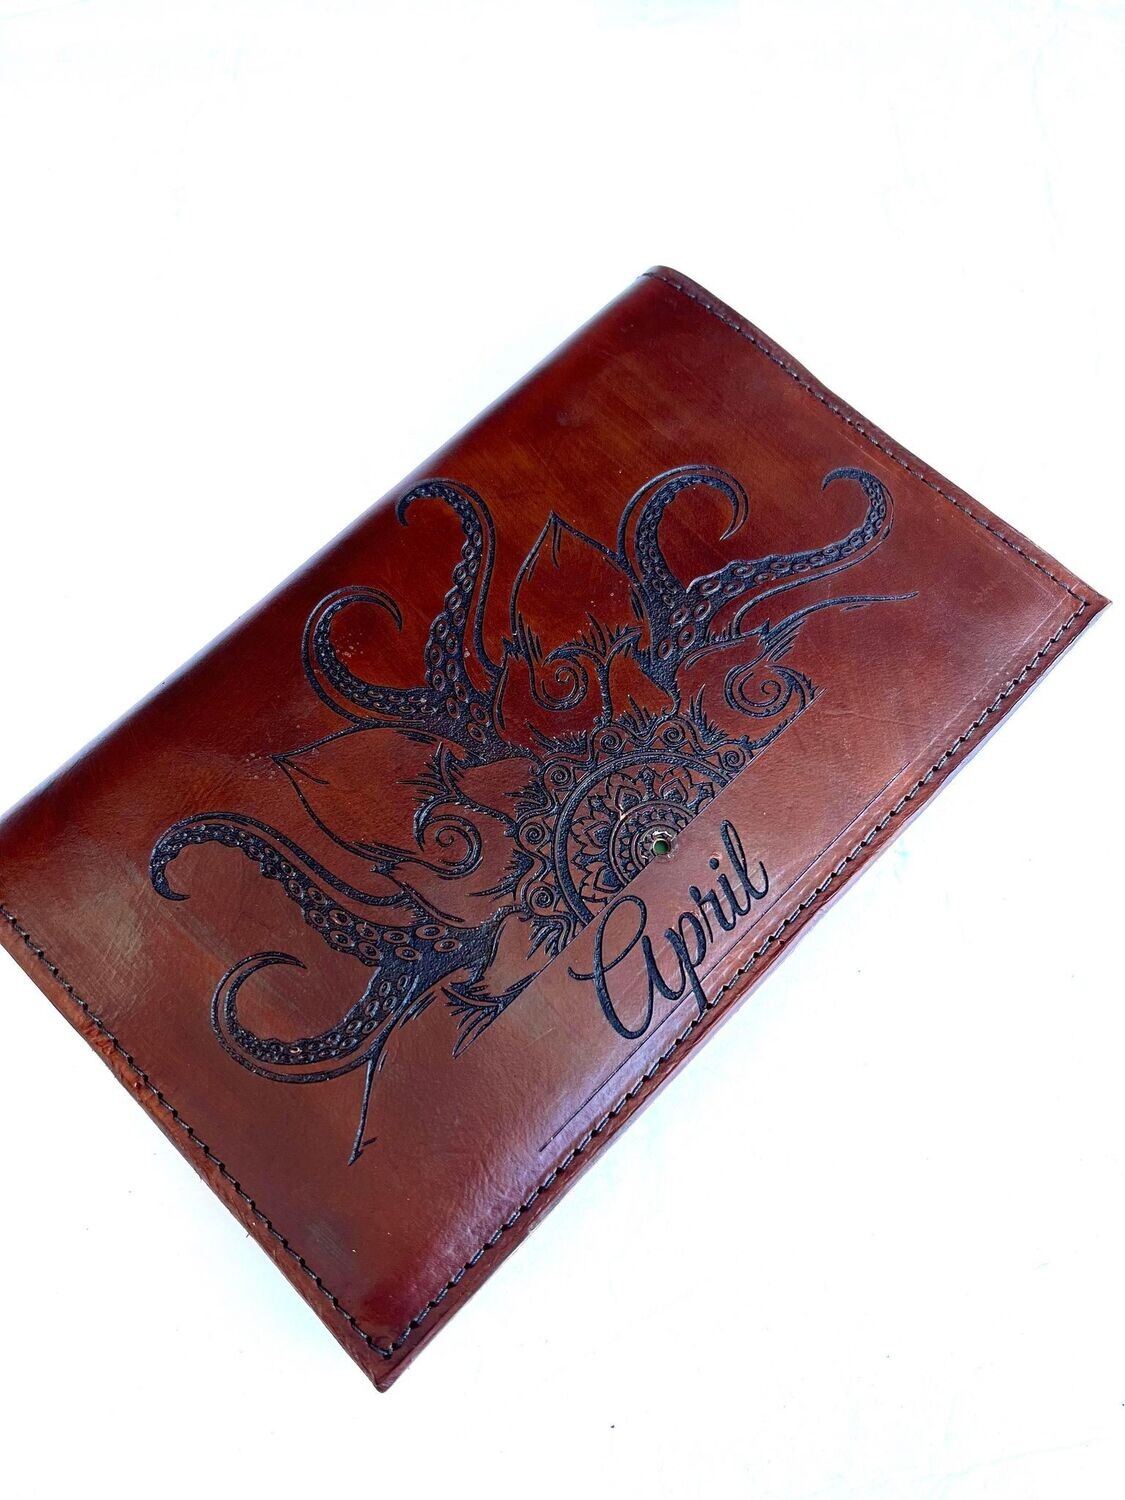 Mandala Octopus Customized Personal Leather Journal